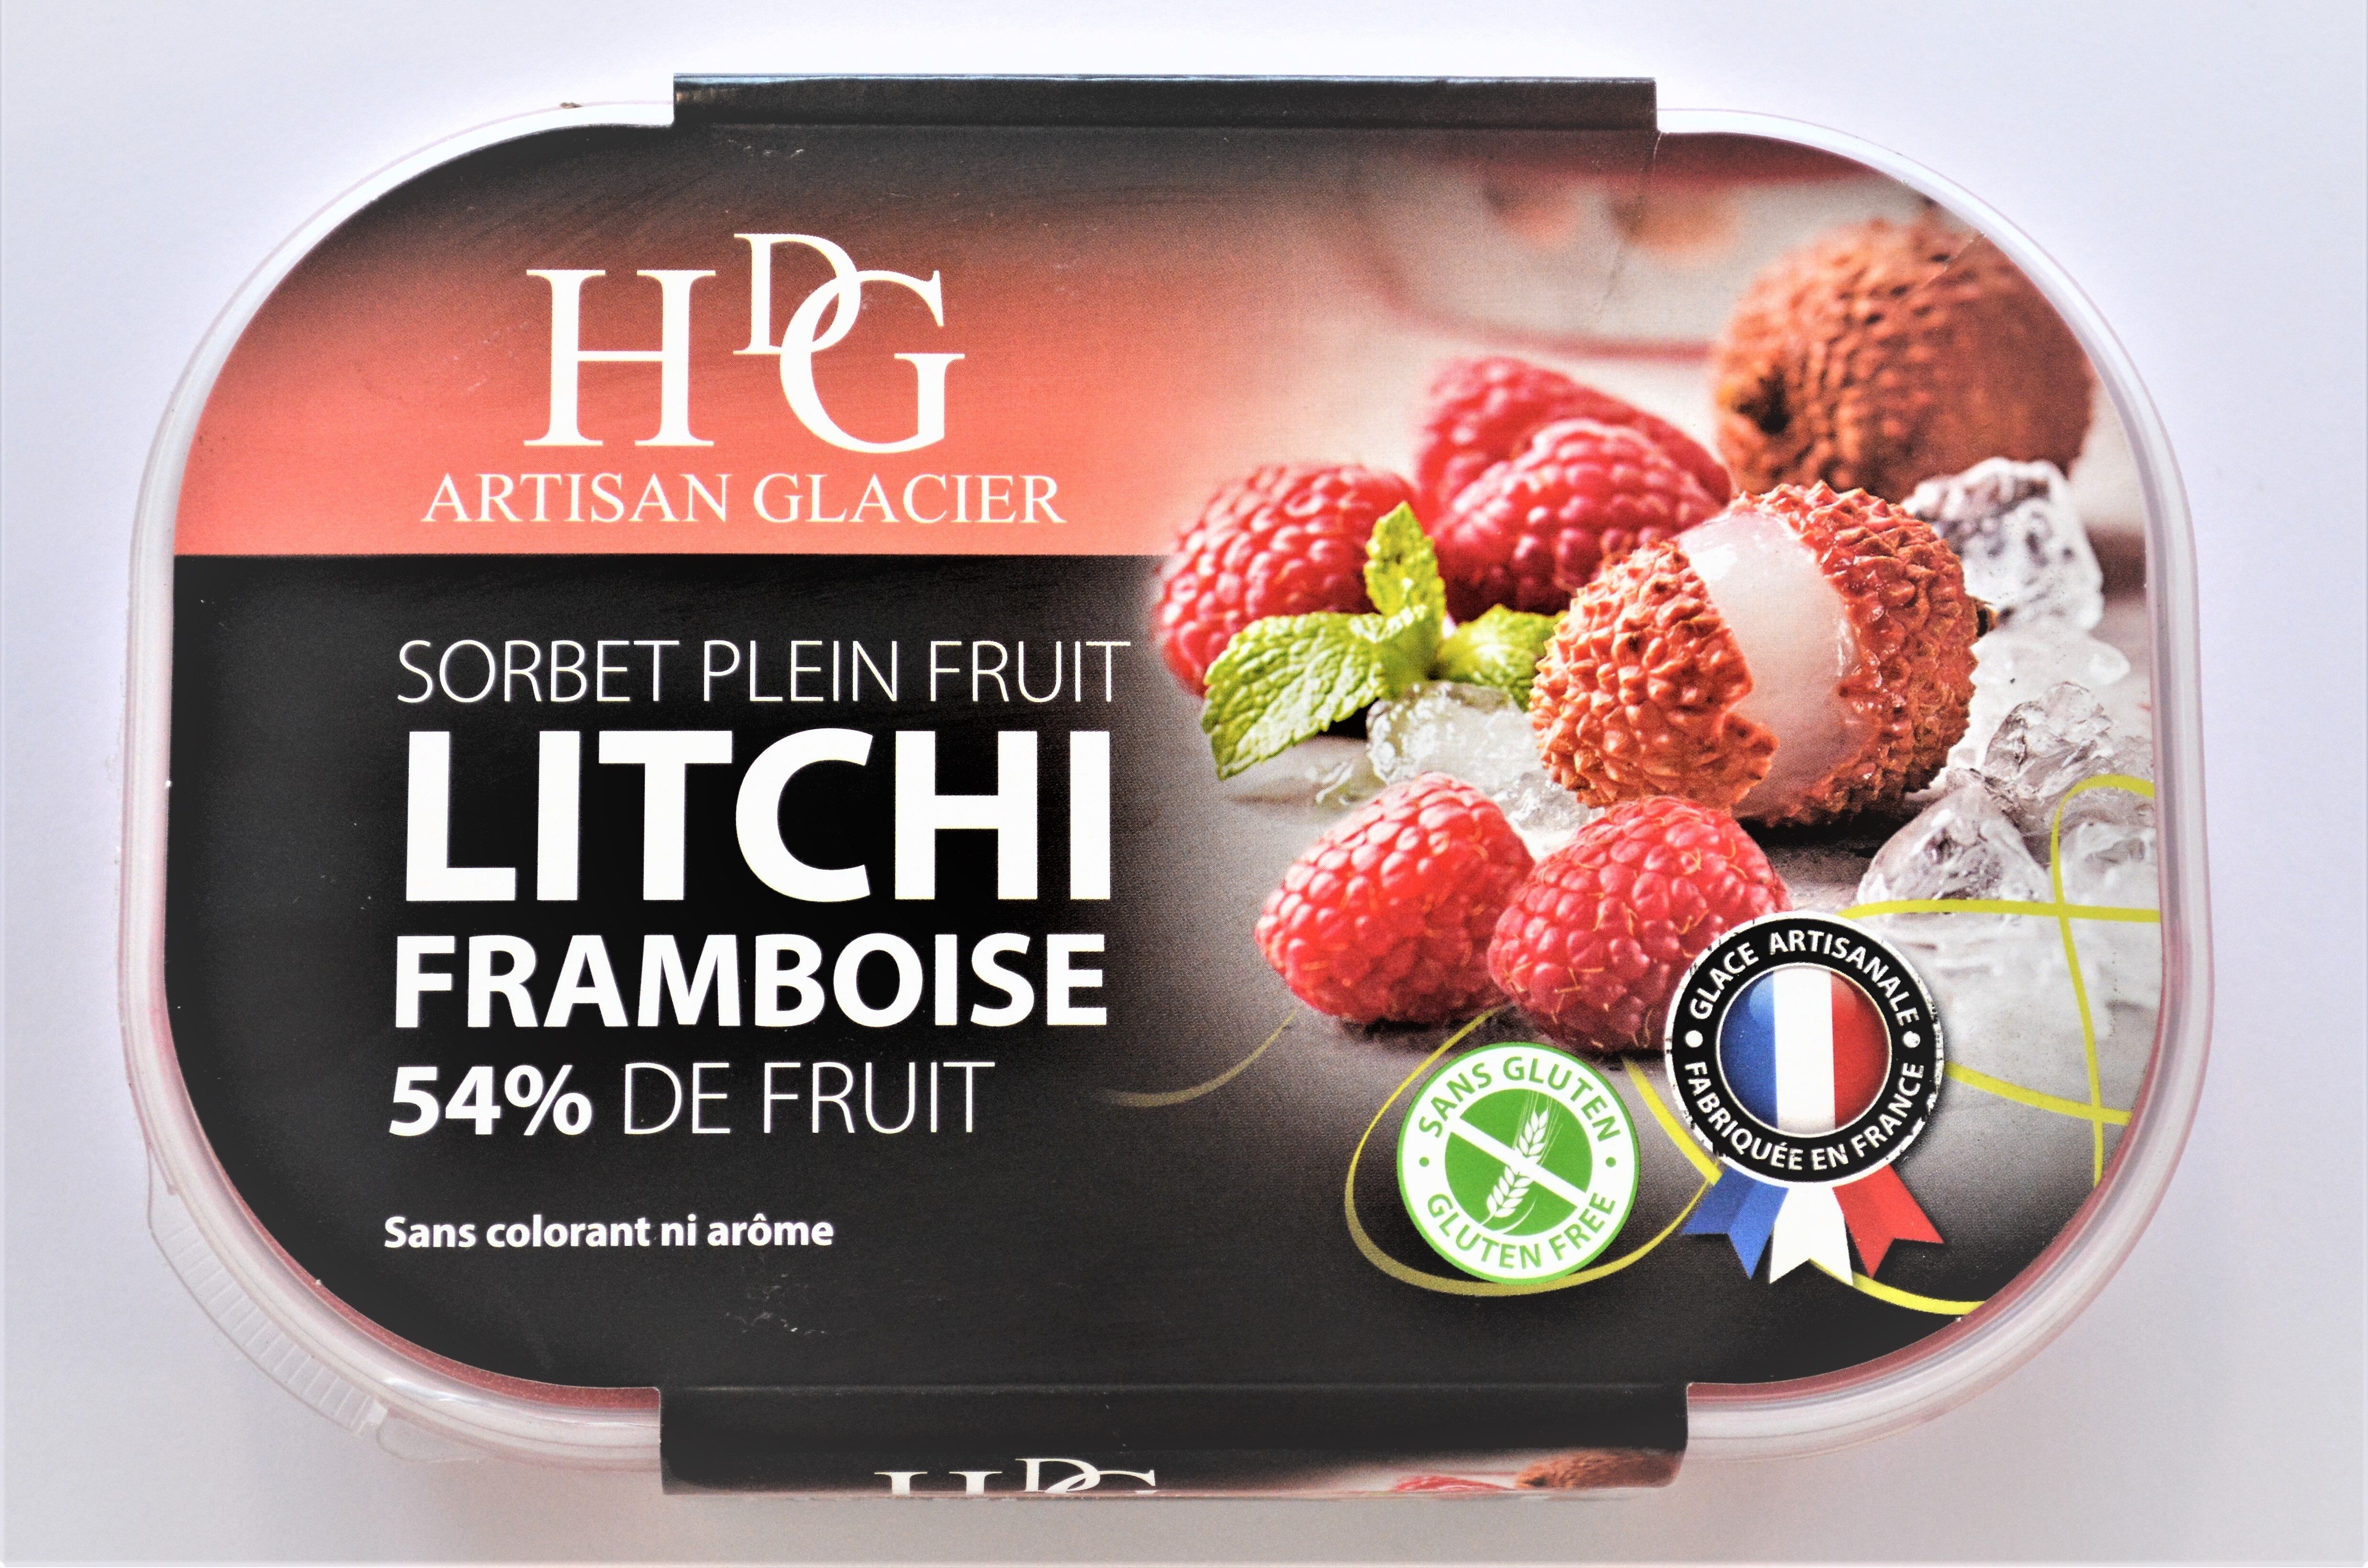 Sorbet plein fruit litchi framboise - Producto - fr